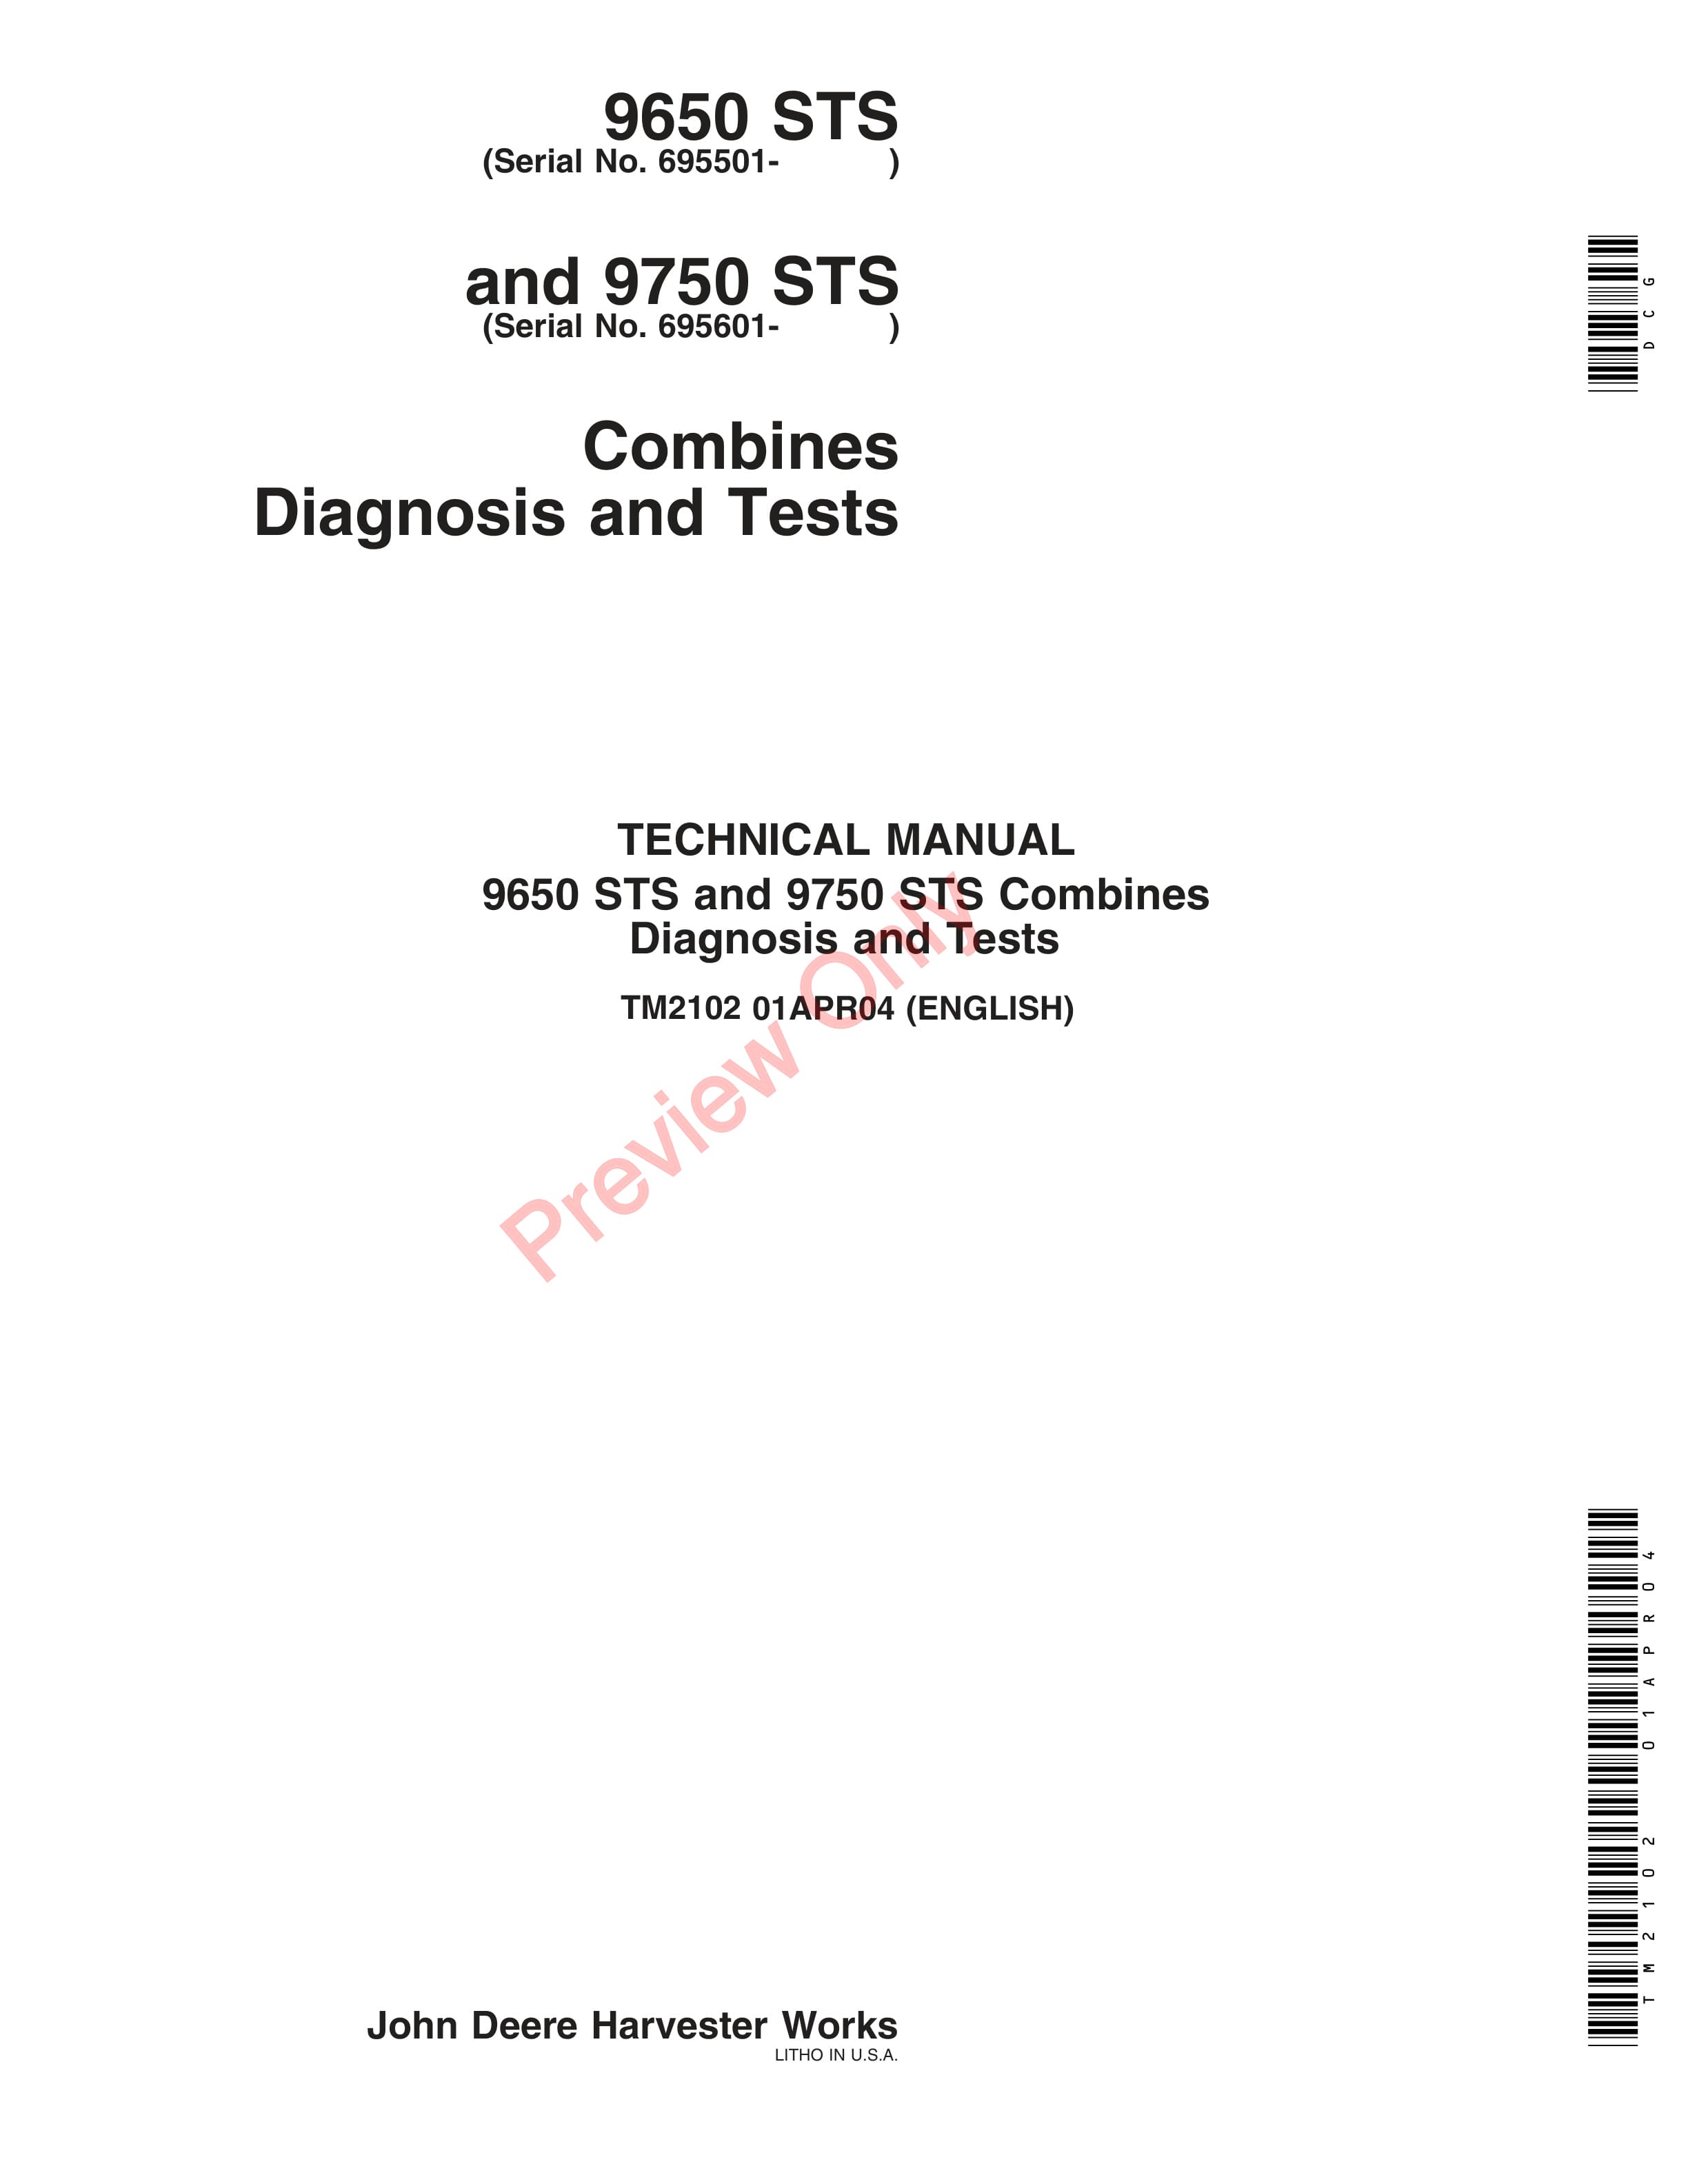 John Deere 9650 STS Combines (695501-), 9750 STS Combines (695601-) Diagnostic and Test Technical Manual TM2102 01APR04 PDF